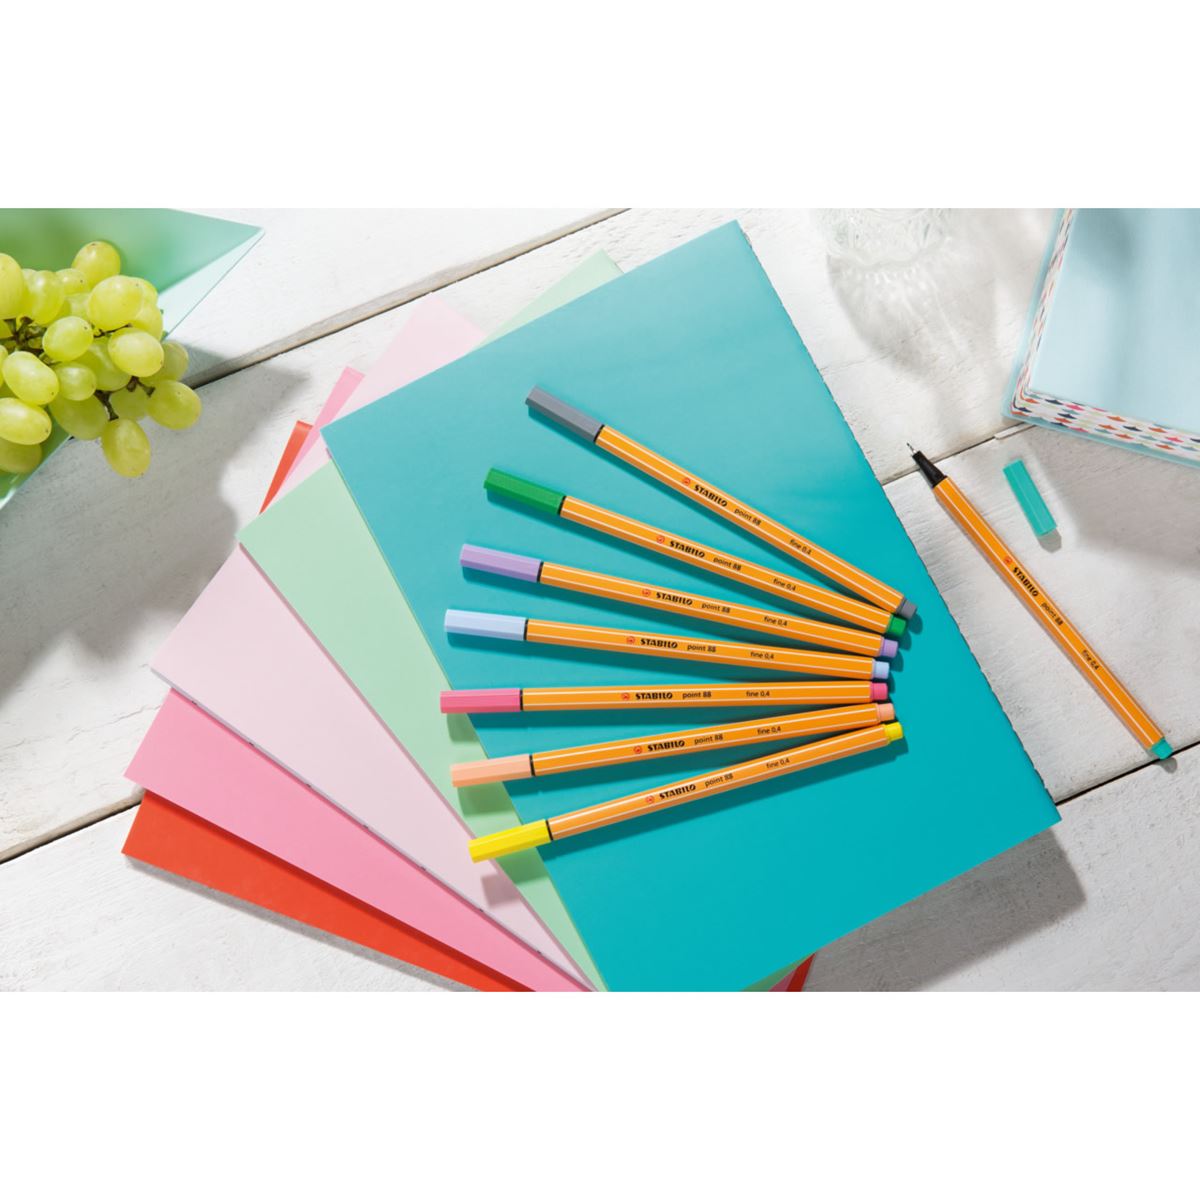 STABILO point 88 -Set of 8 Pastel Fine Liner Pens